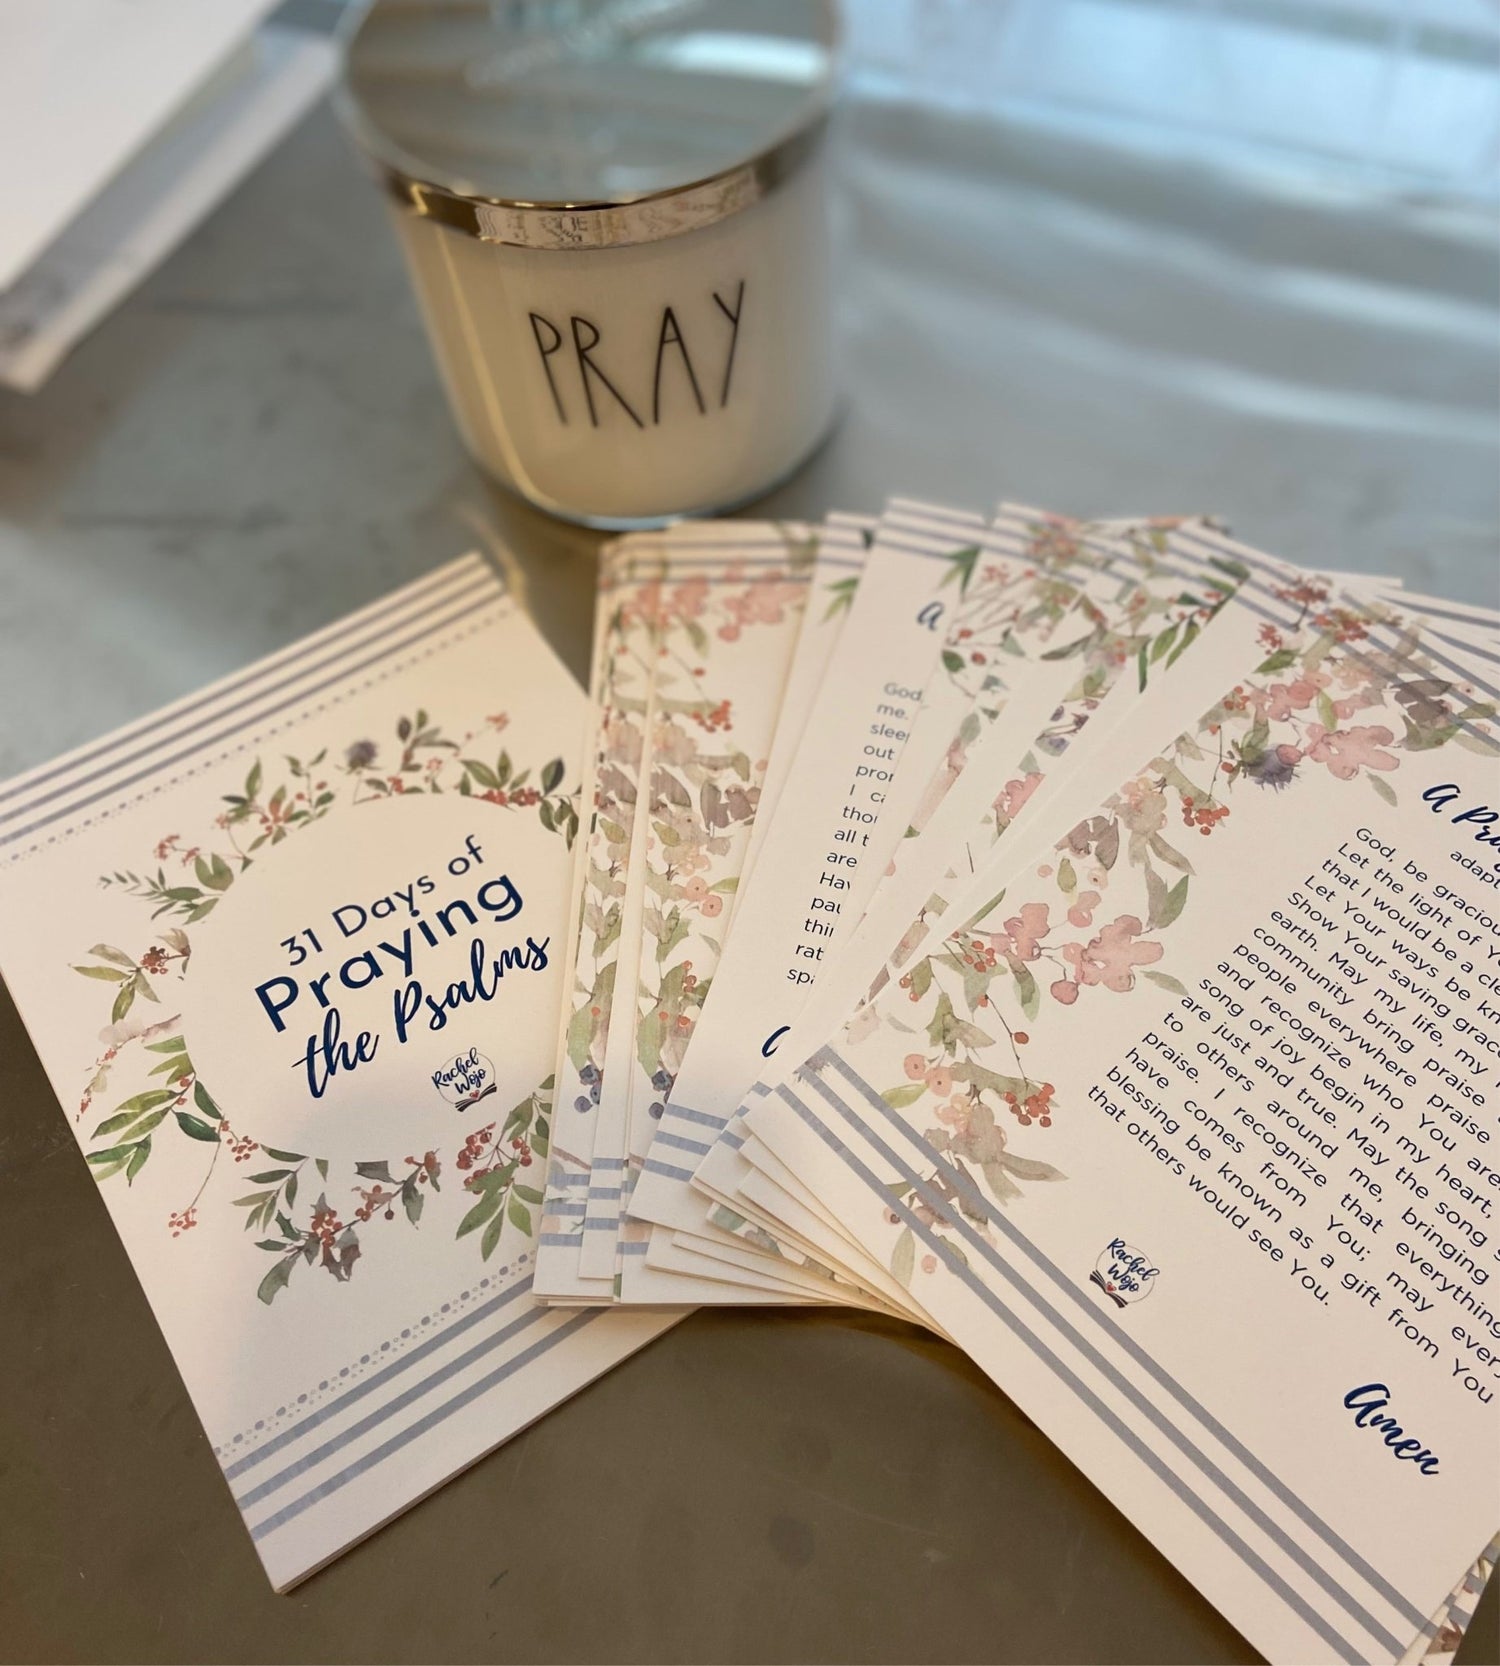 31 Days of Praying the Psalms CARDS ONLY - Rachel Wojo Shop